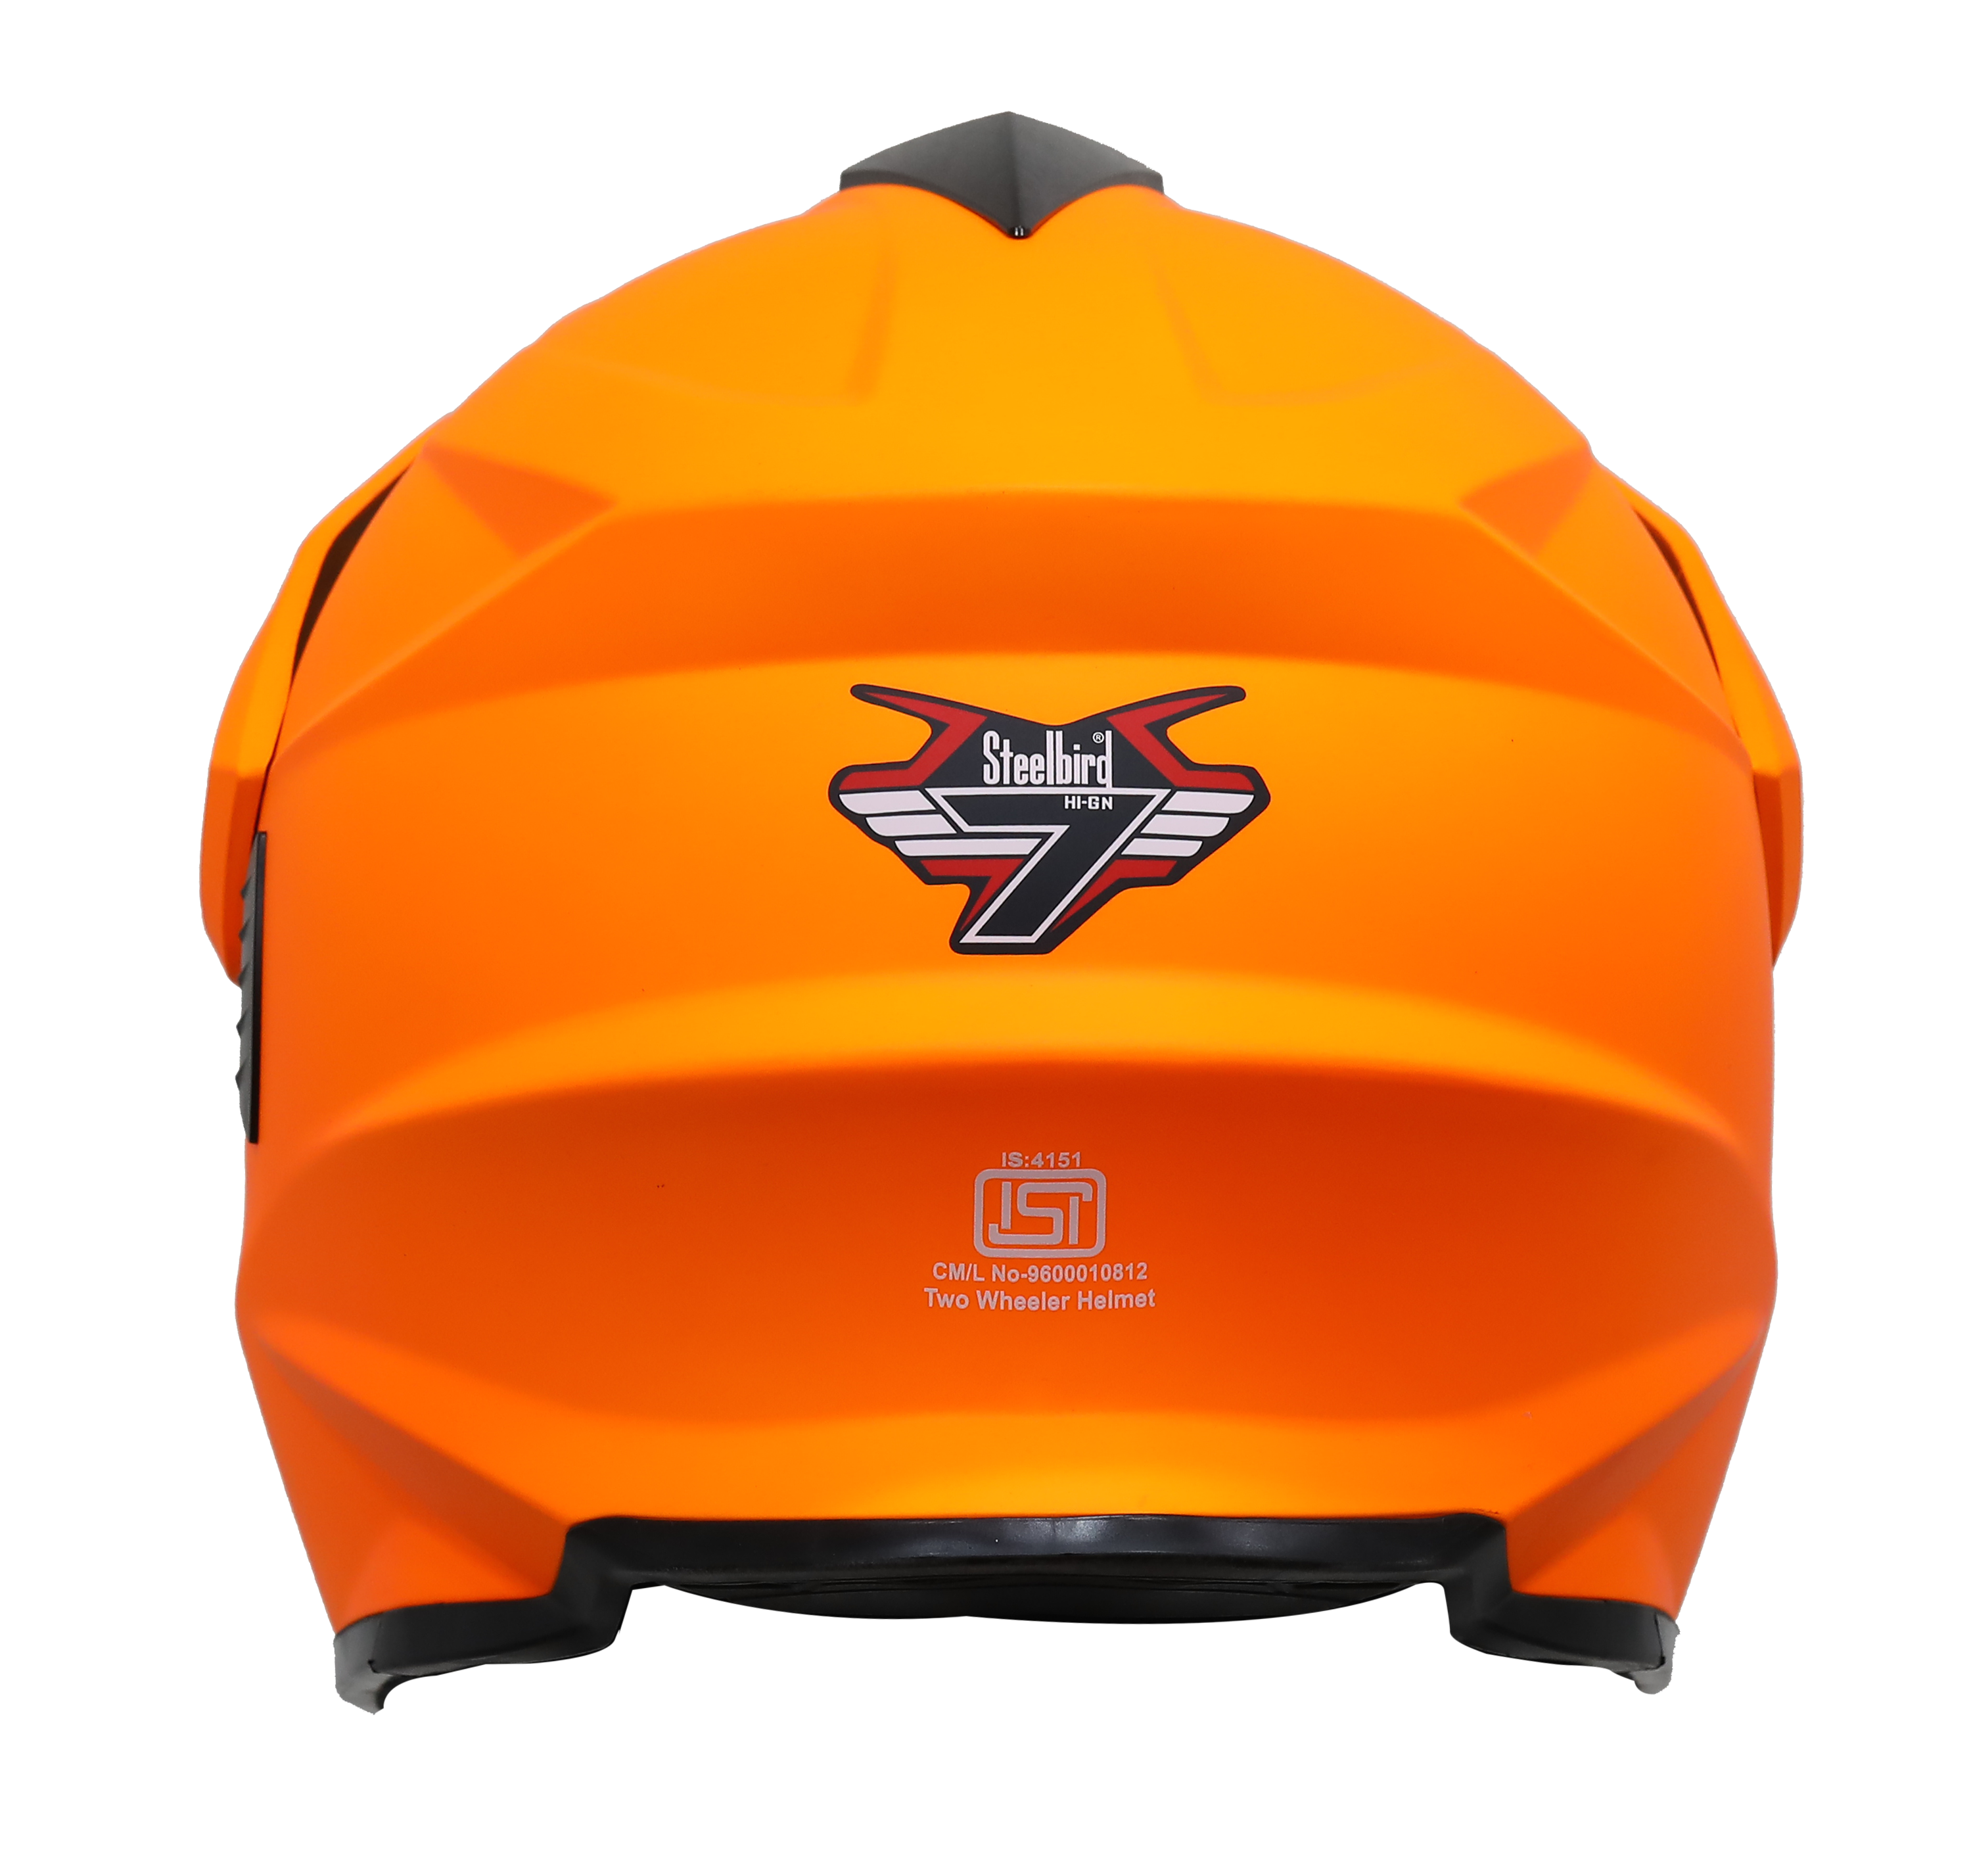 SB-42 Turf Single Visor Glossy Fluo Orange With Anti-Fog Shield Night Vision Blue Visor (With Extra Clear Visor)